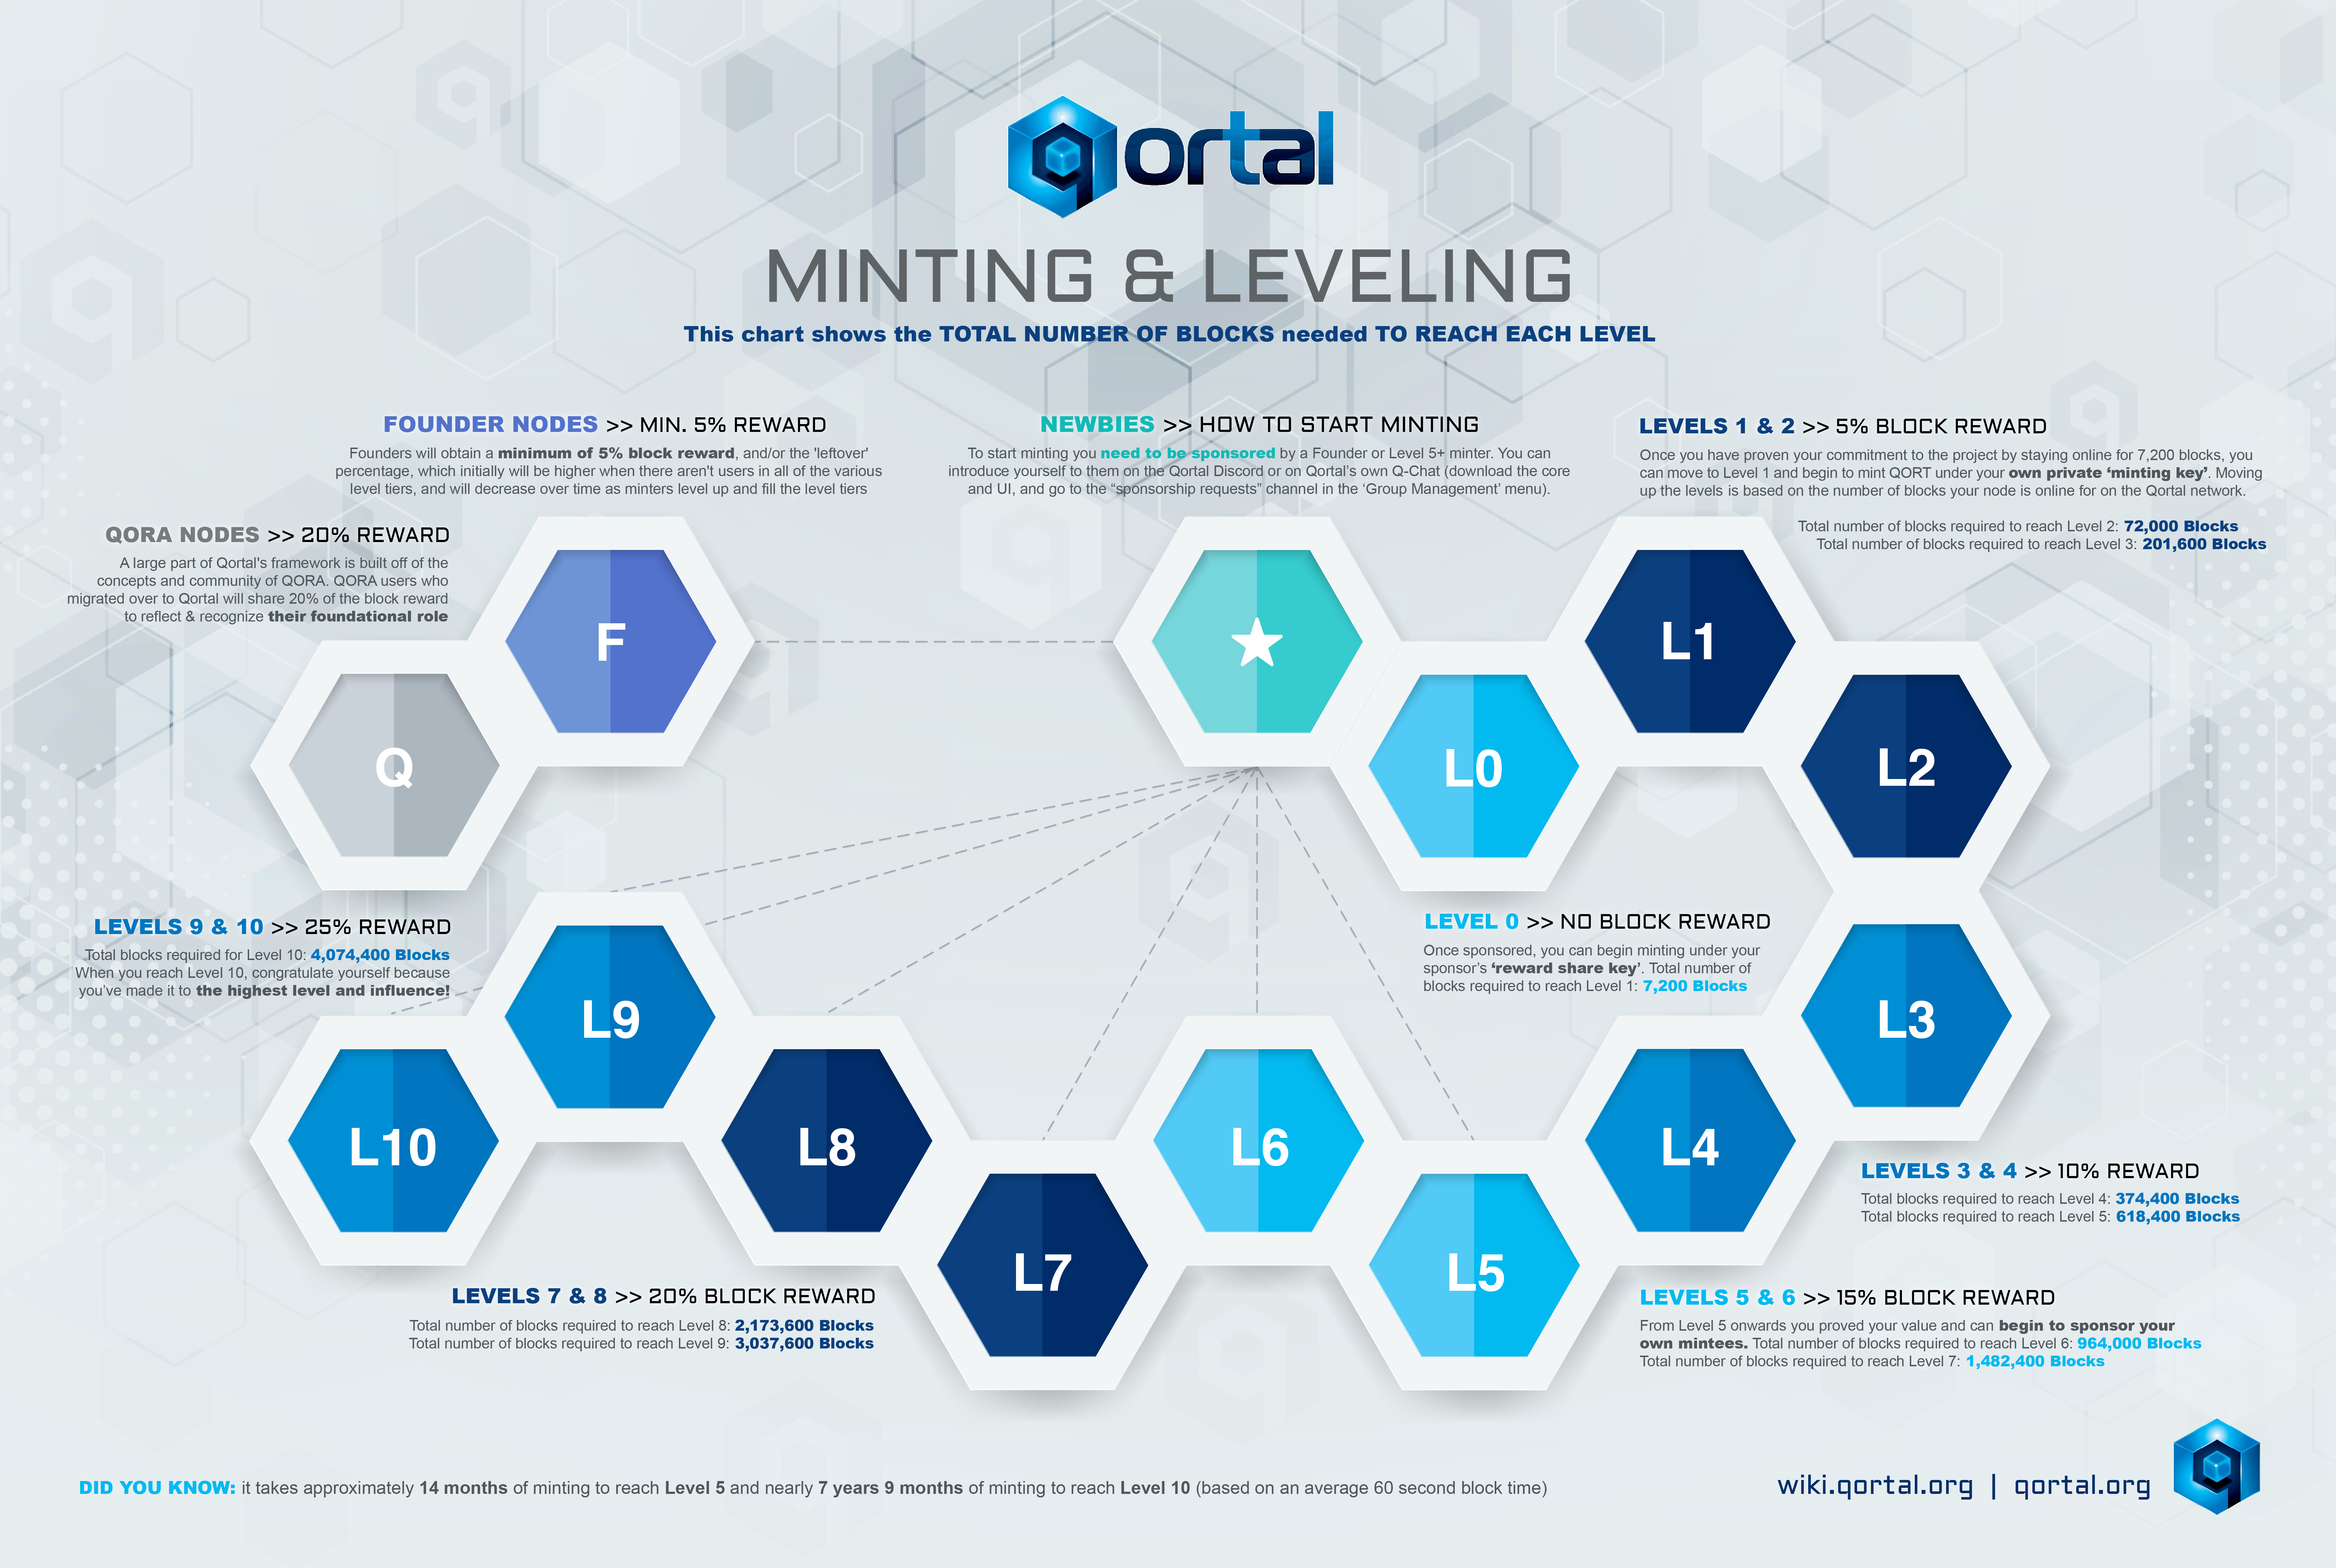 qortal_minting_and_leveling_2020_english.jpg